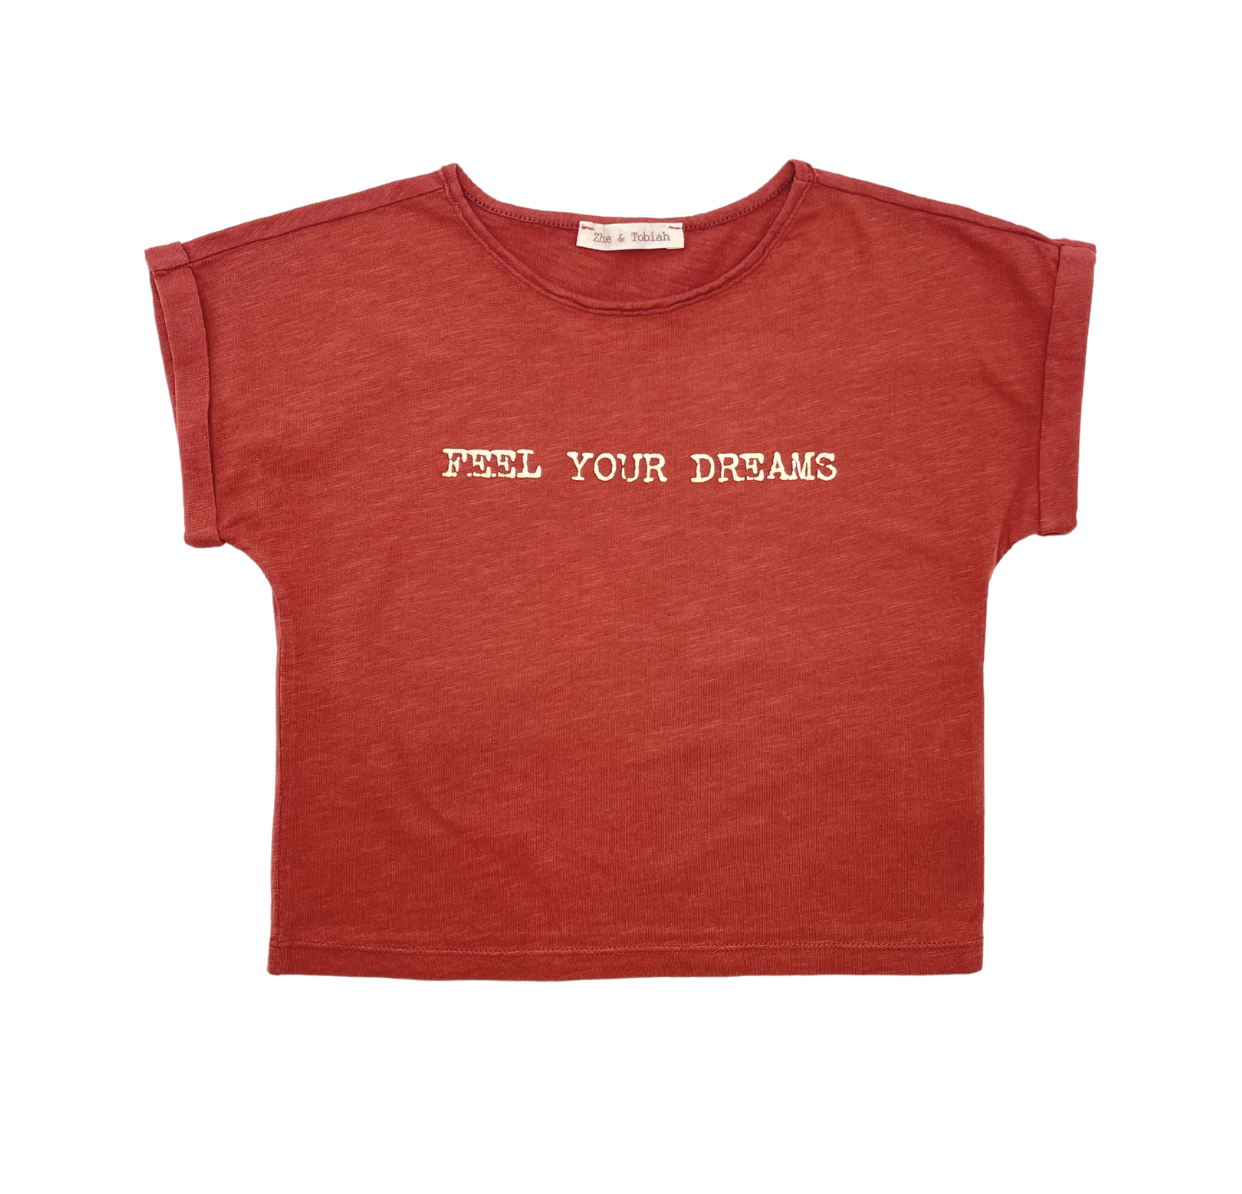 ZHOE & TOBIAH - T-shirt "Feel your dreams" - 2 ans